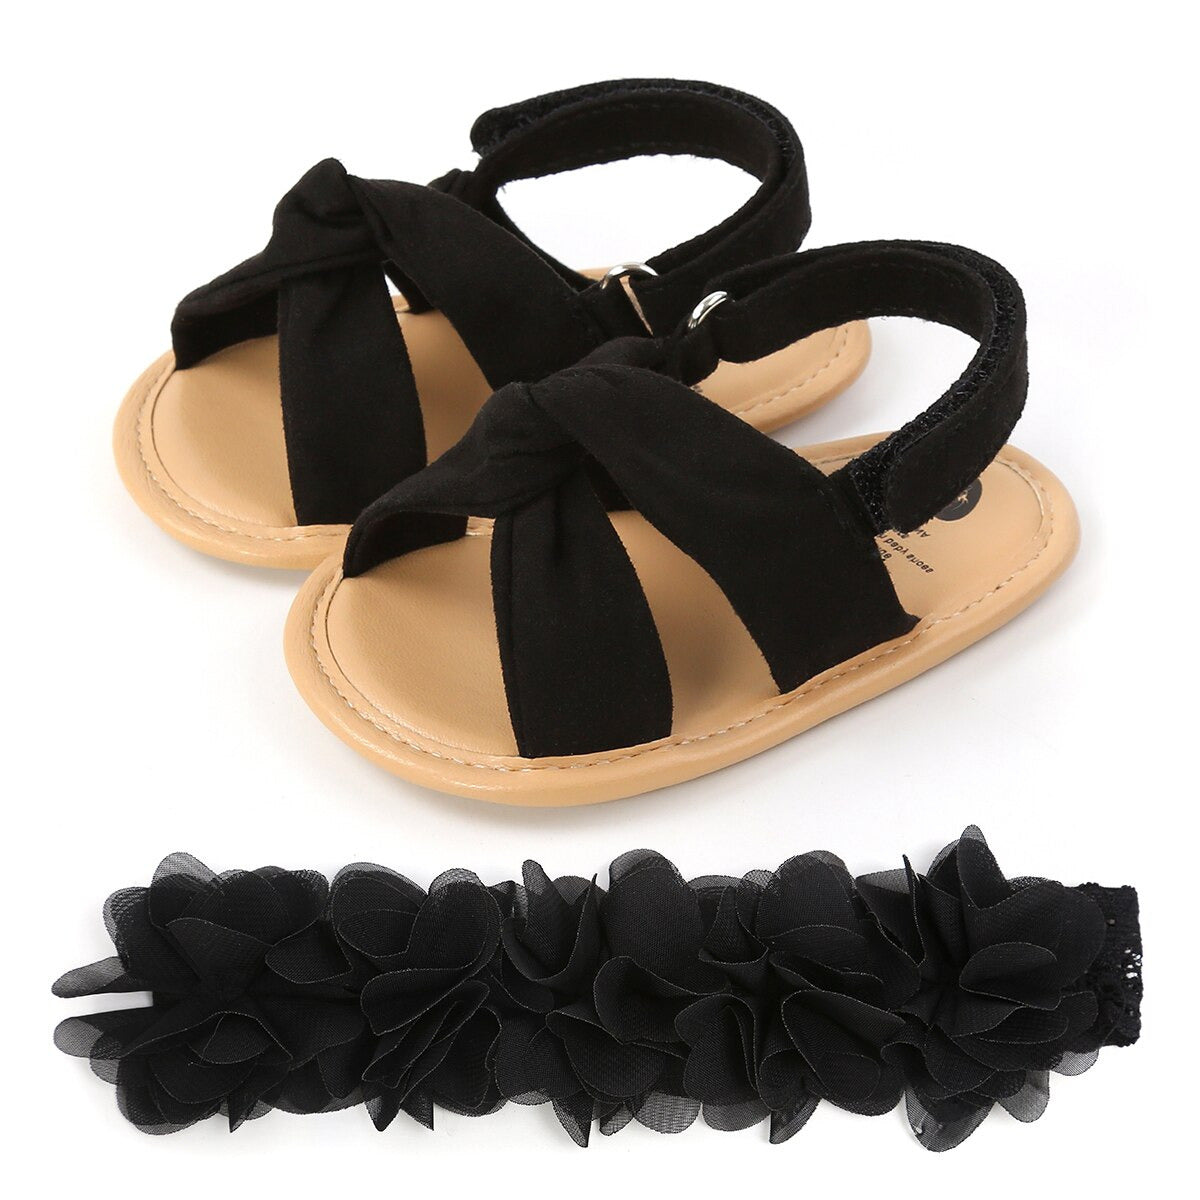 Sandals and Chiffon Flower Headband Set